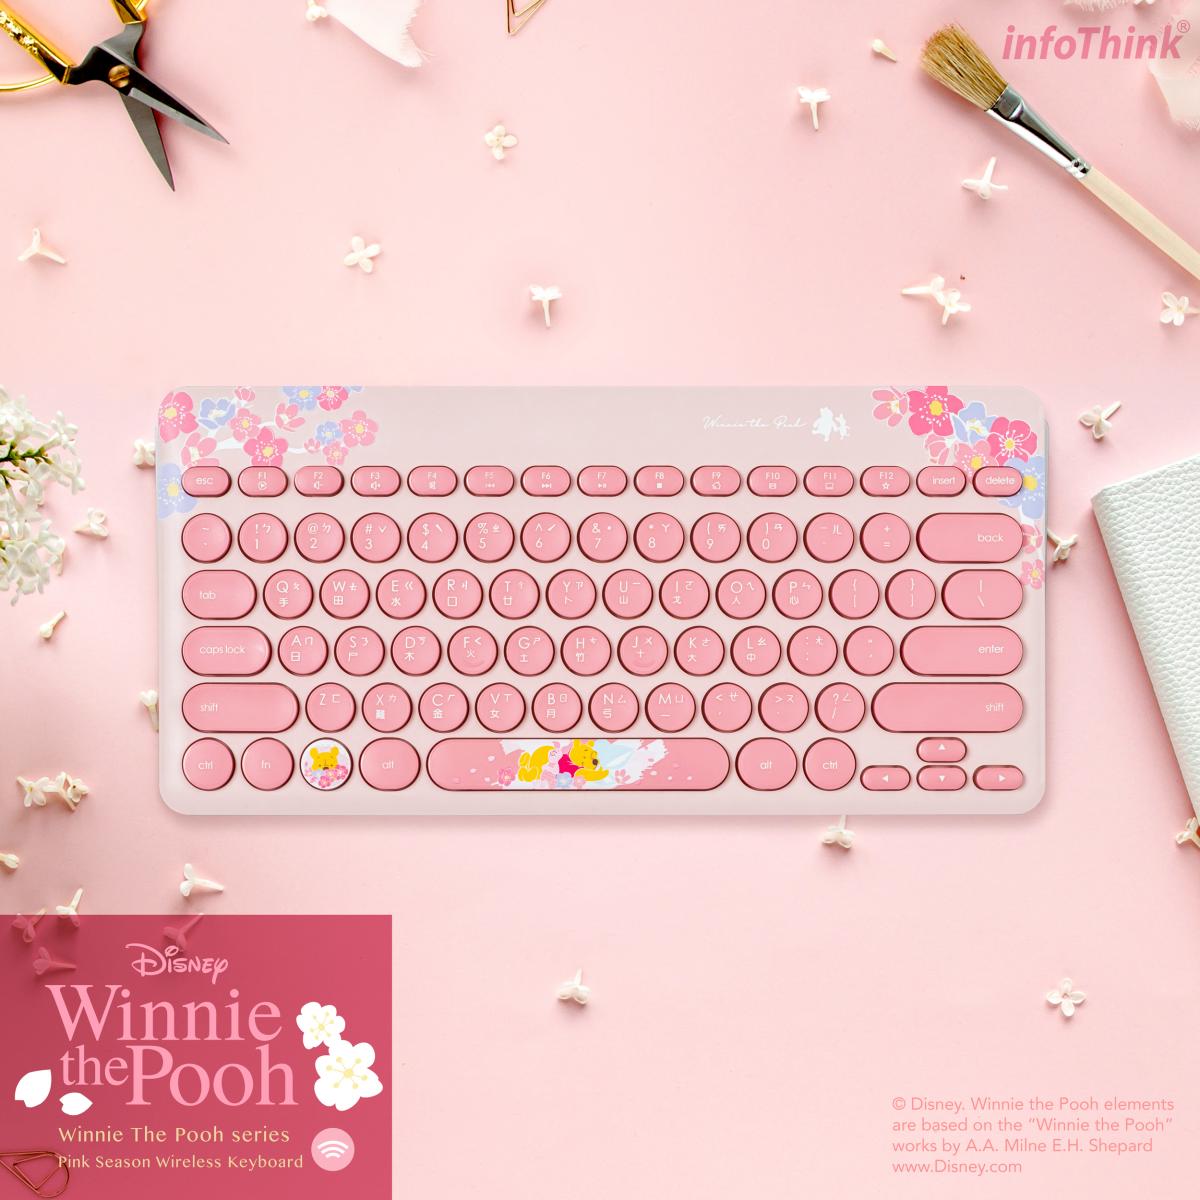 InfoThink x Disney 2.4G Wireless Keyboard Pink Seasons Winnie The Pooh ver